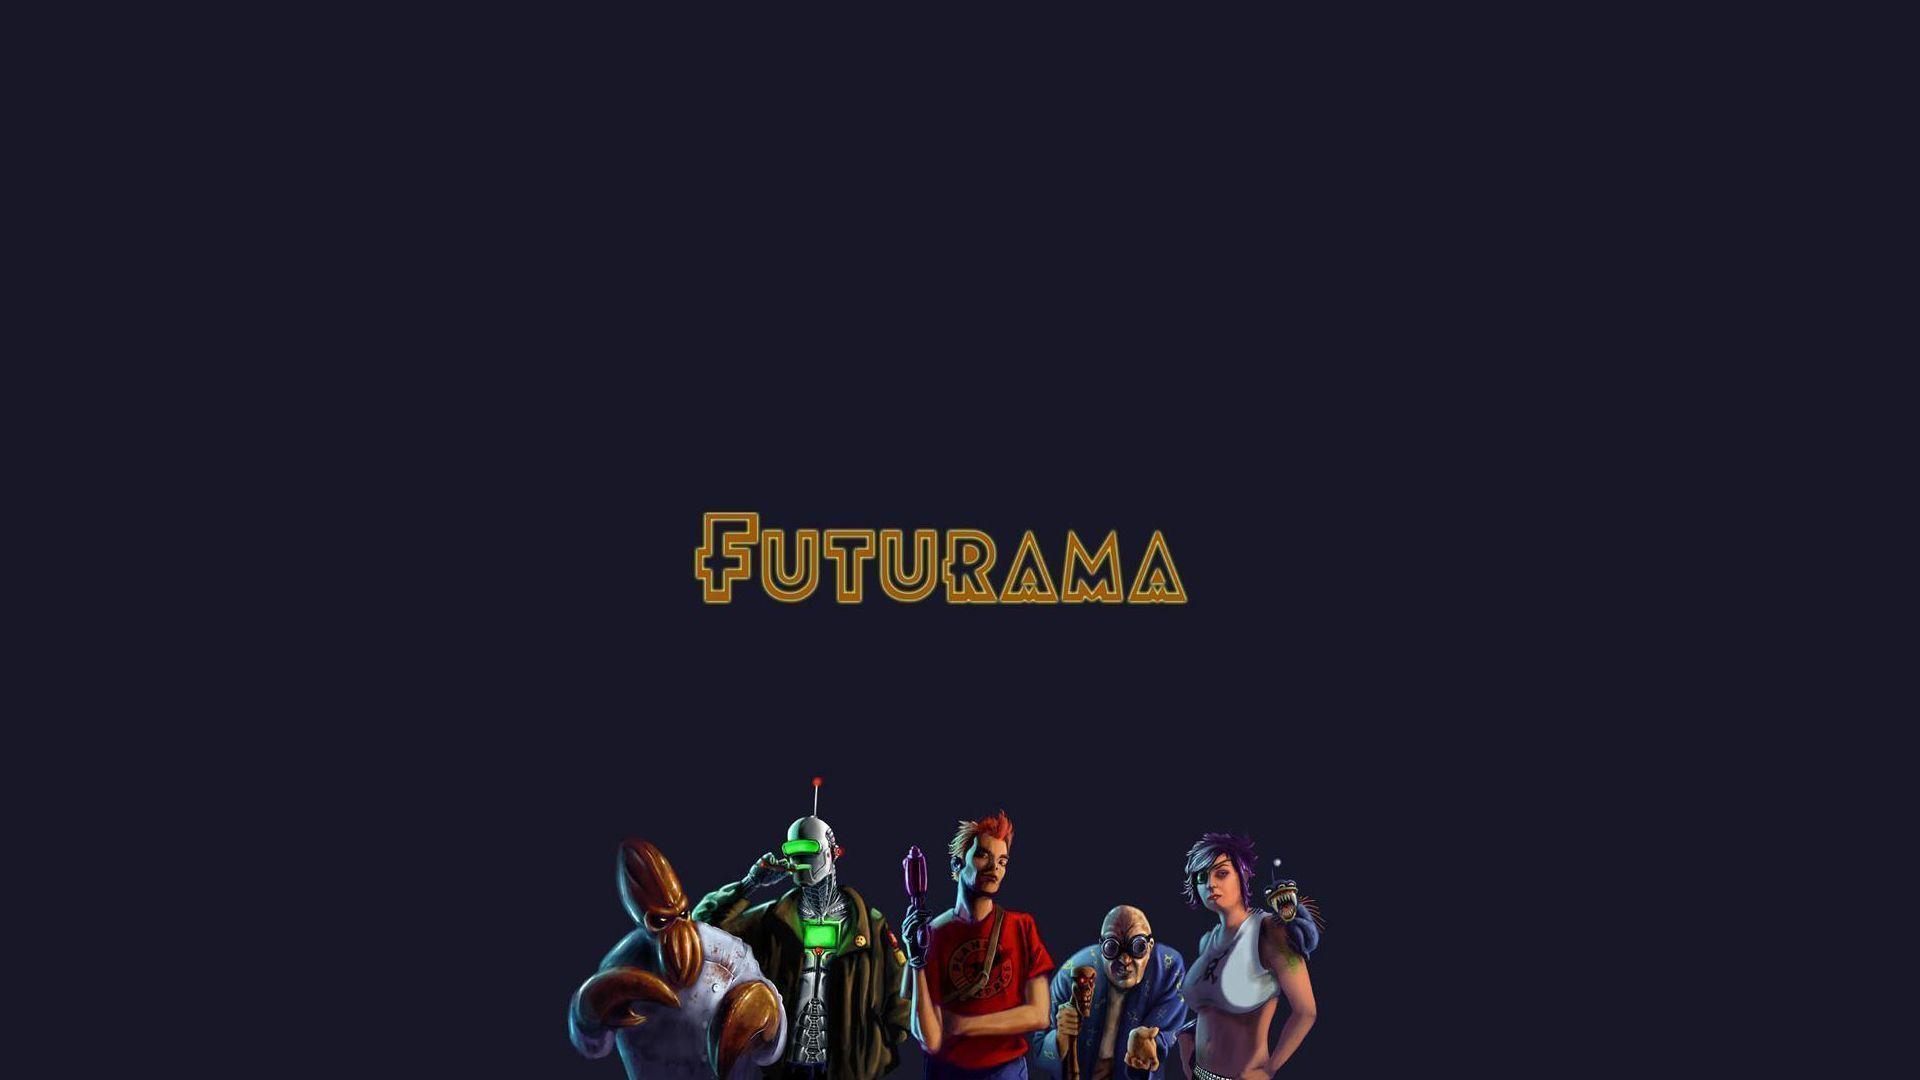 Futurama Computer Wallpapers, Desktop Backgrounds 1920x1080 Id: 89380